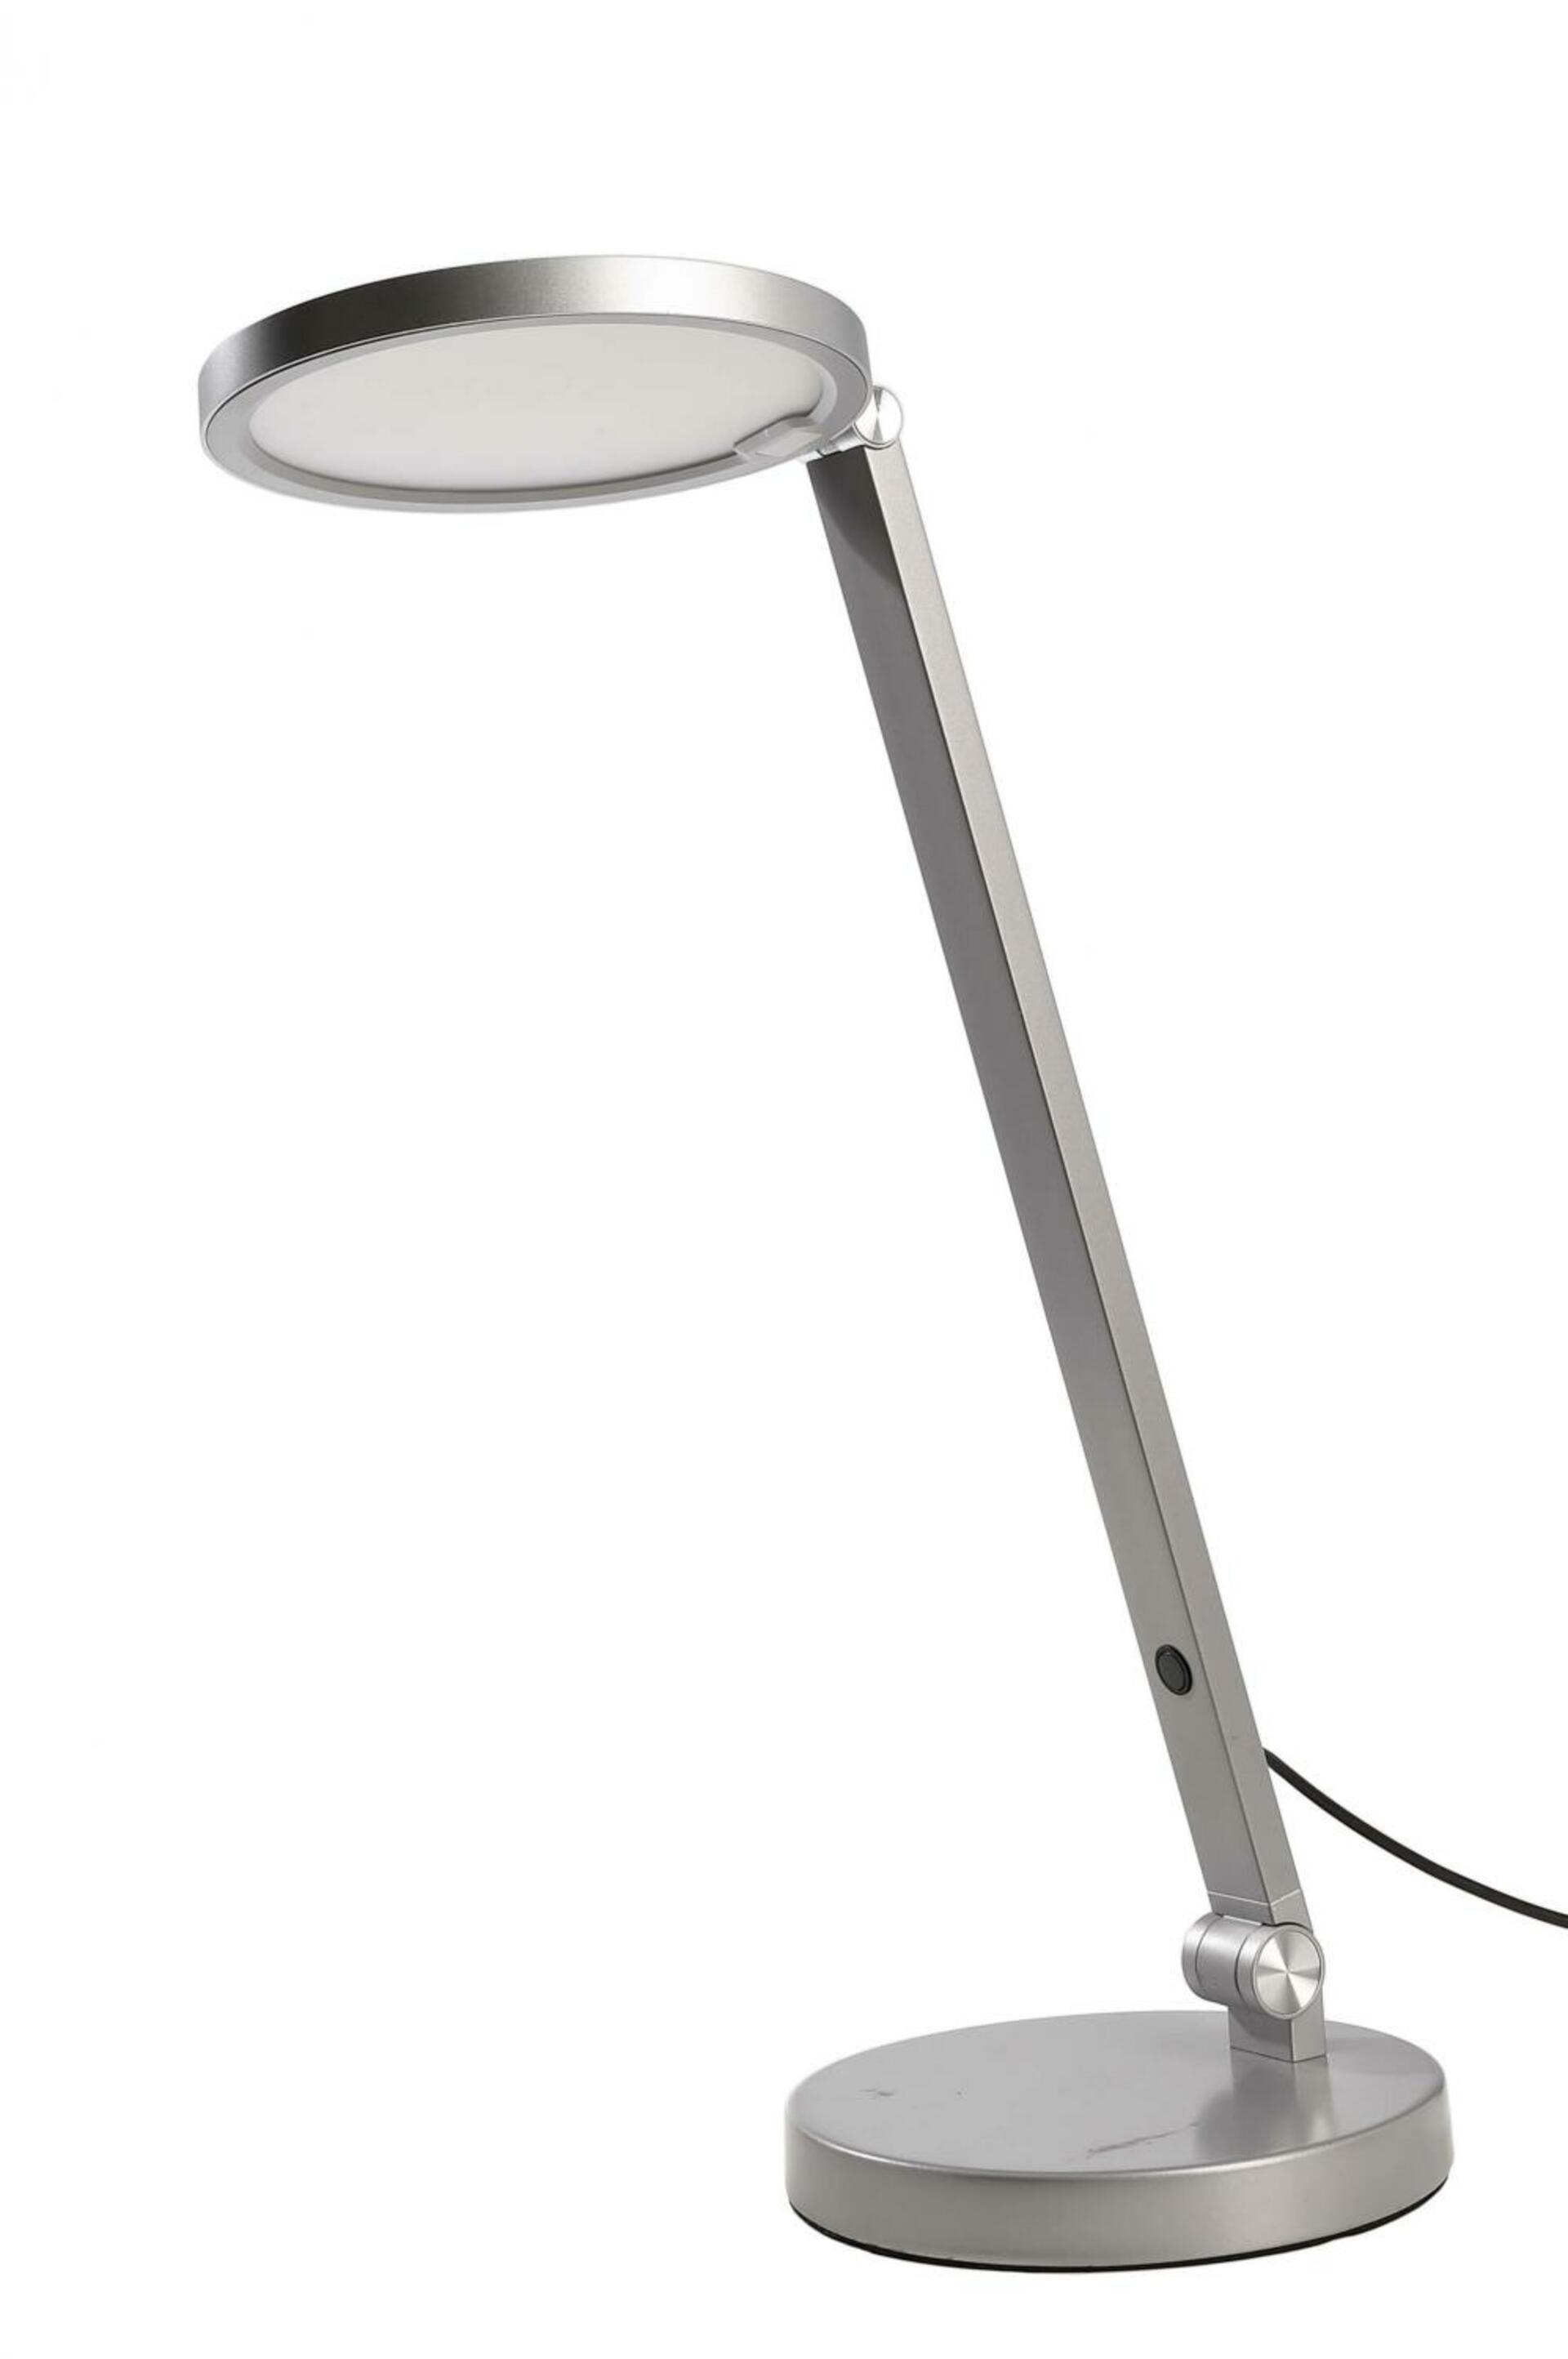 Light Impressions Deko-Light stolní lampa Adhara Small 100-240V AC/50-60Hz 10,00 W 3000 K 800 lm 355 stříbrná 346031